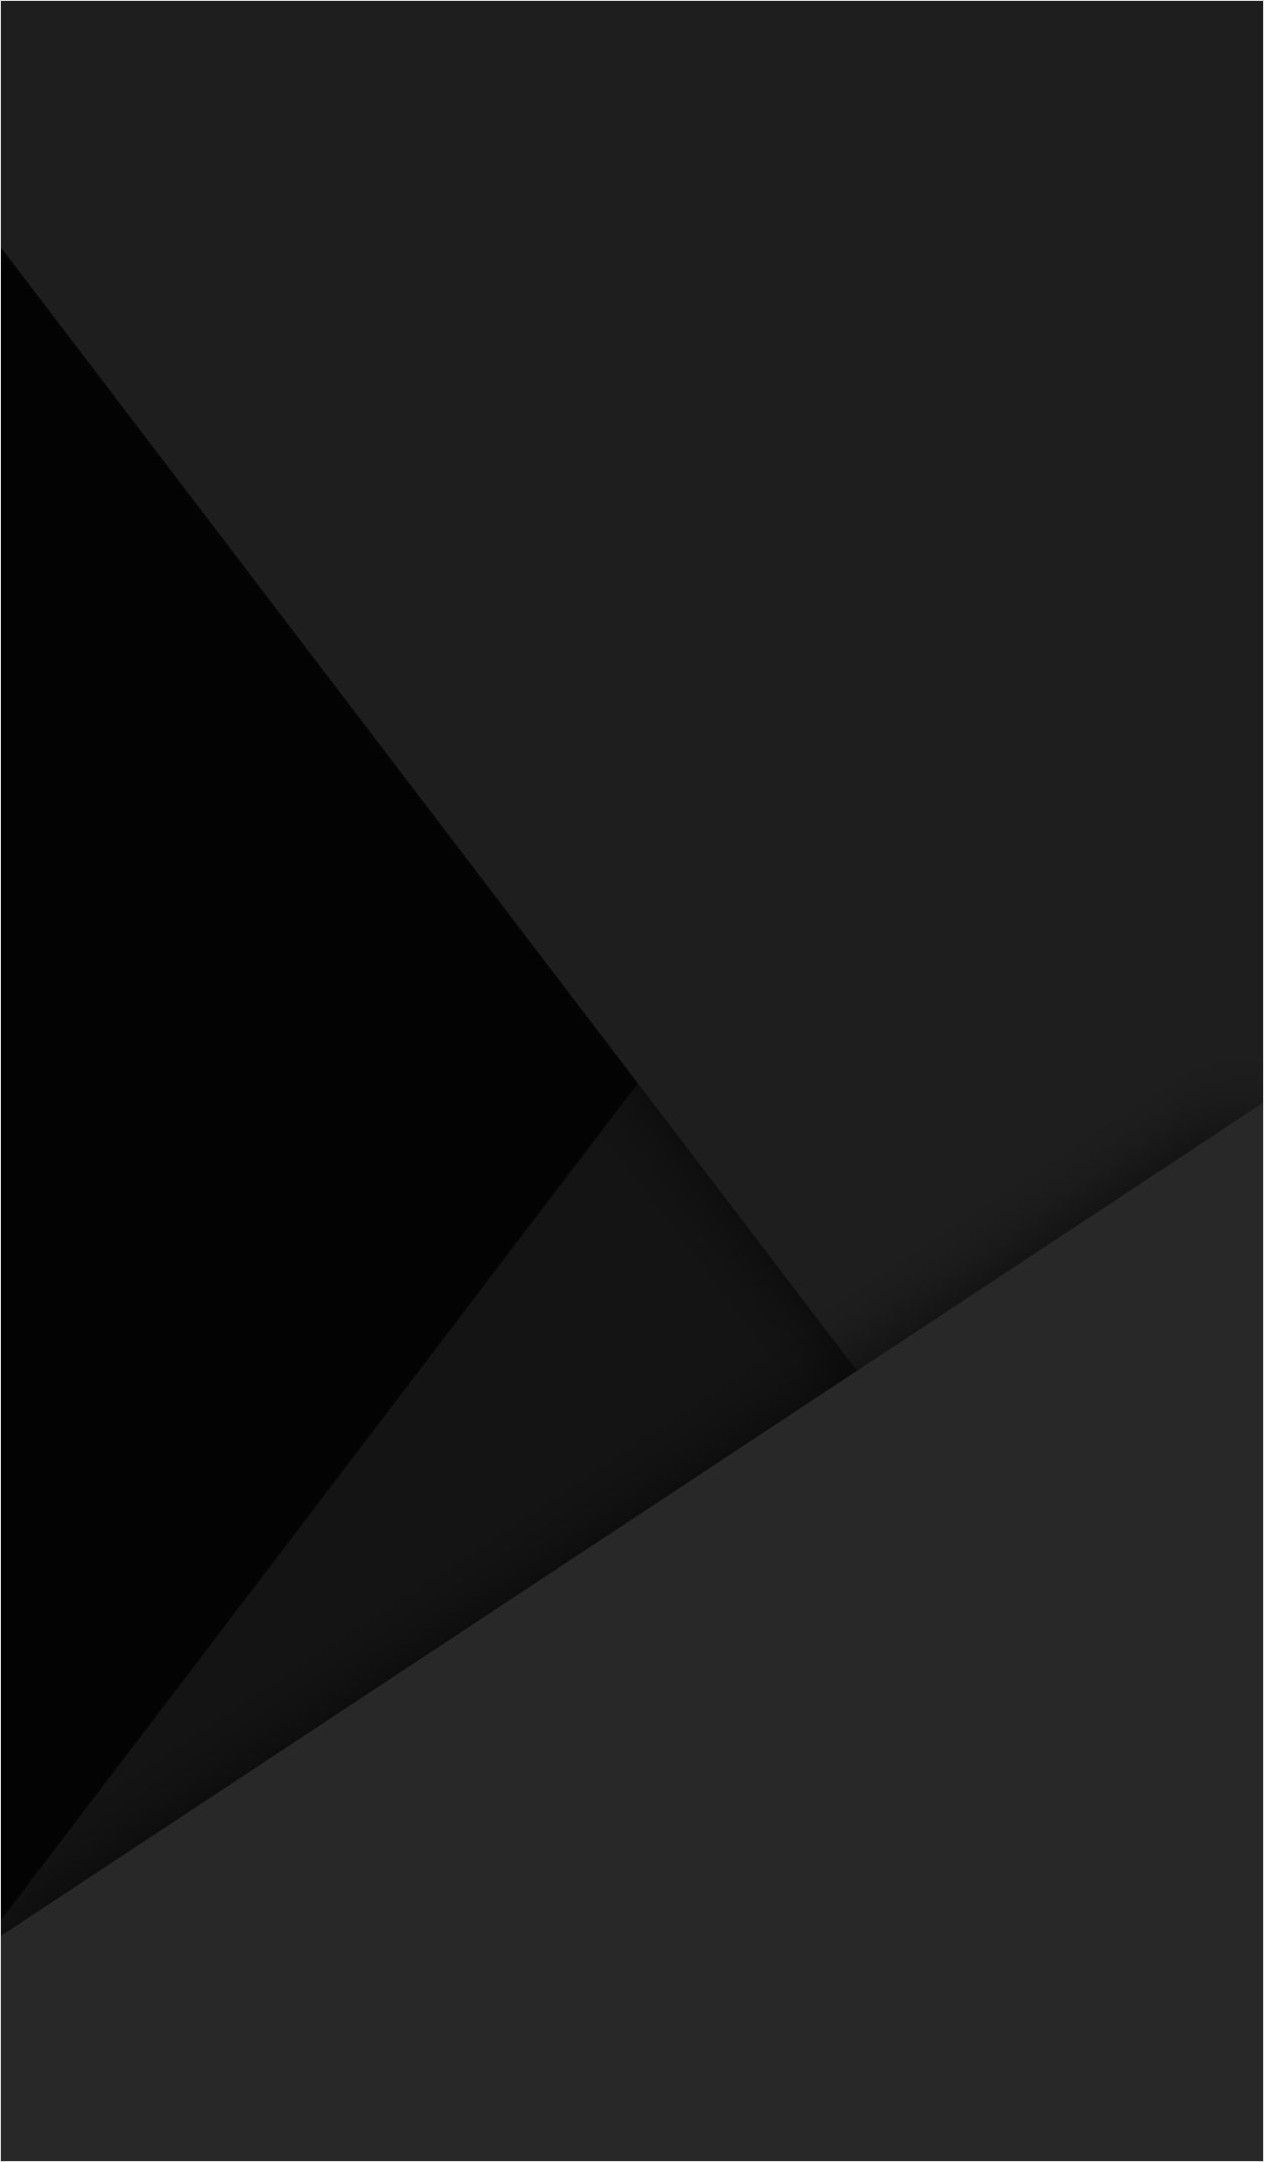 Black Wallpaper Hd 4k For Mobile Download : Black Hd Wallpapers 1080p ...